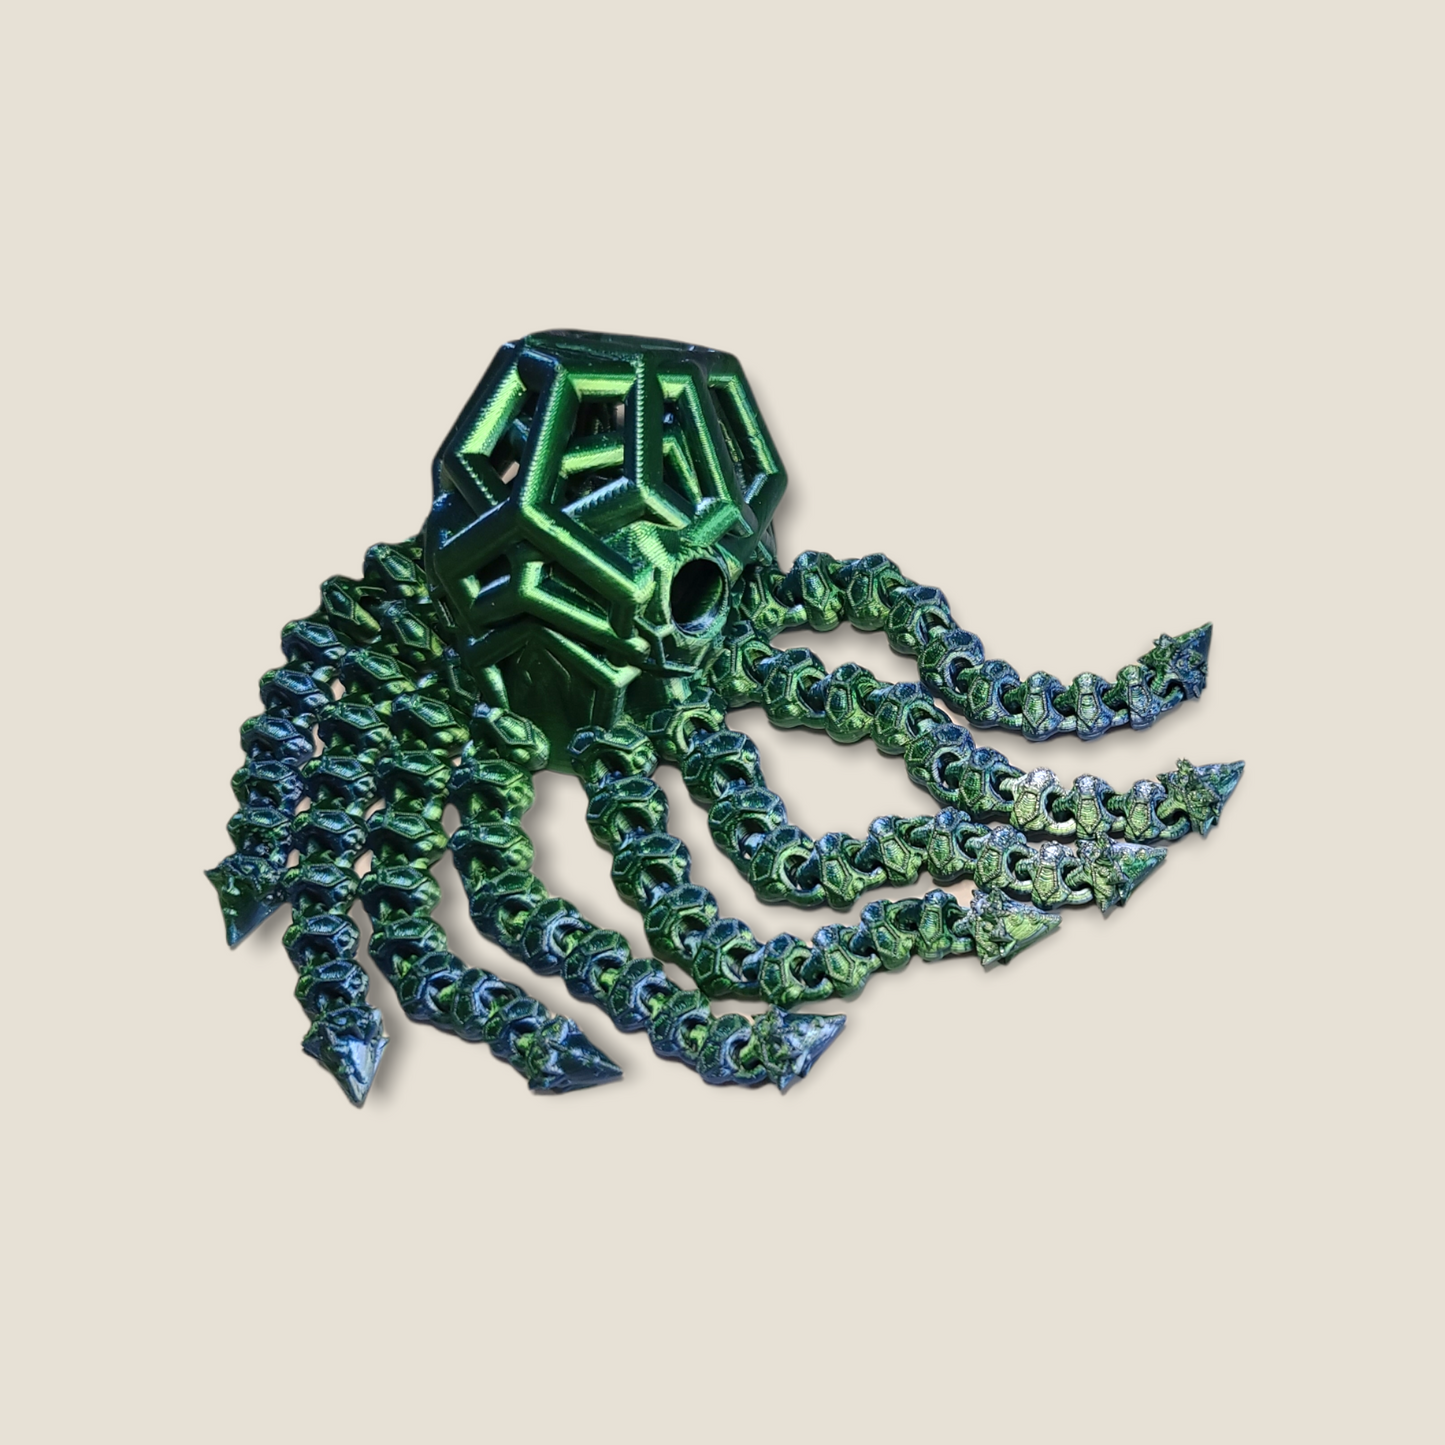 3D Printed Void Octopus